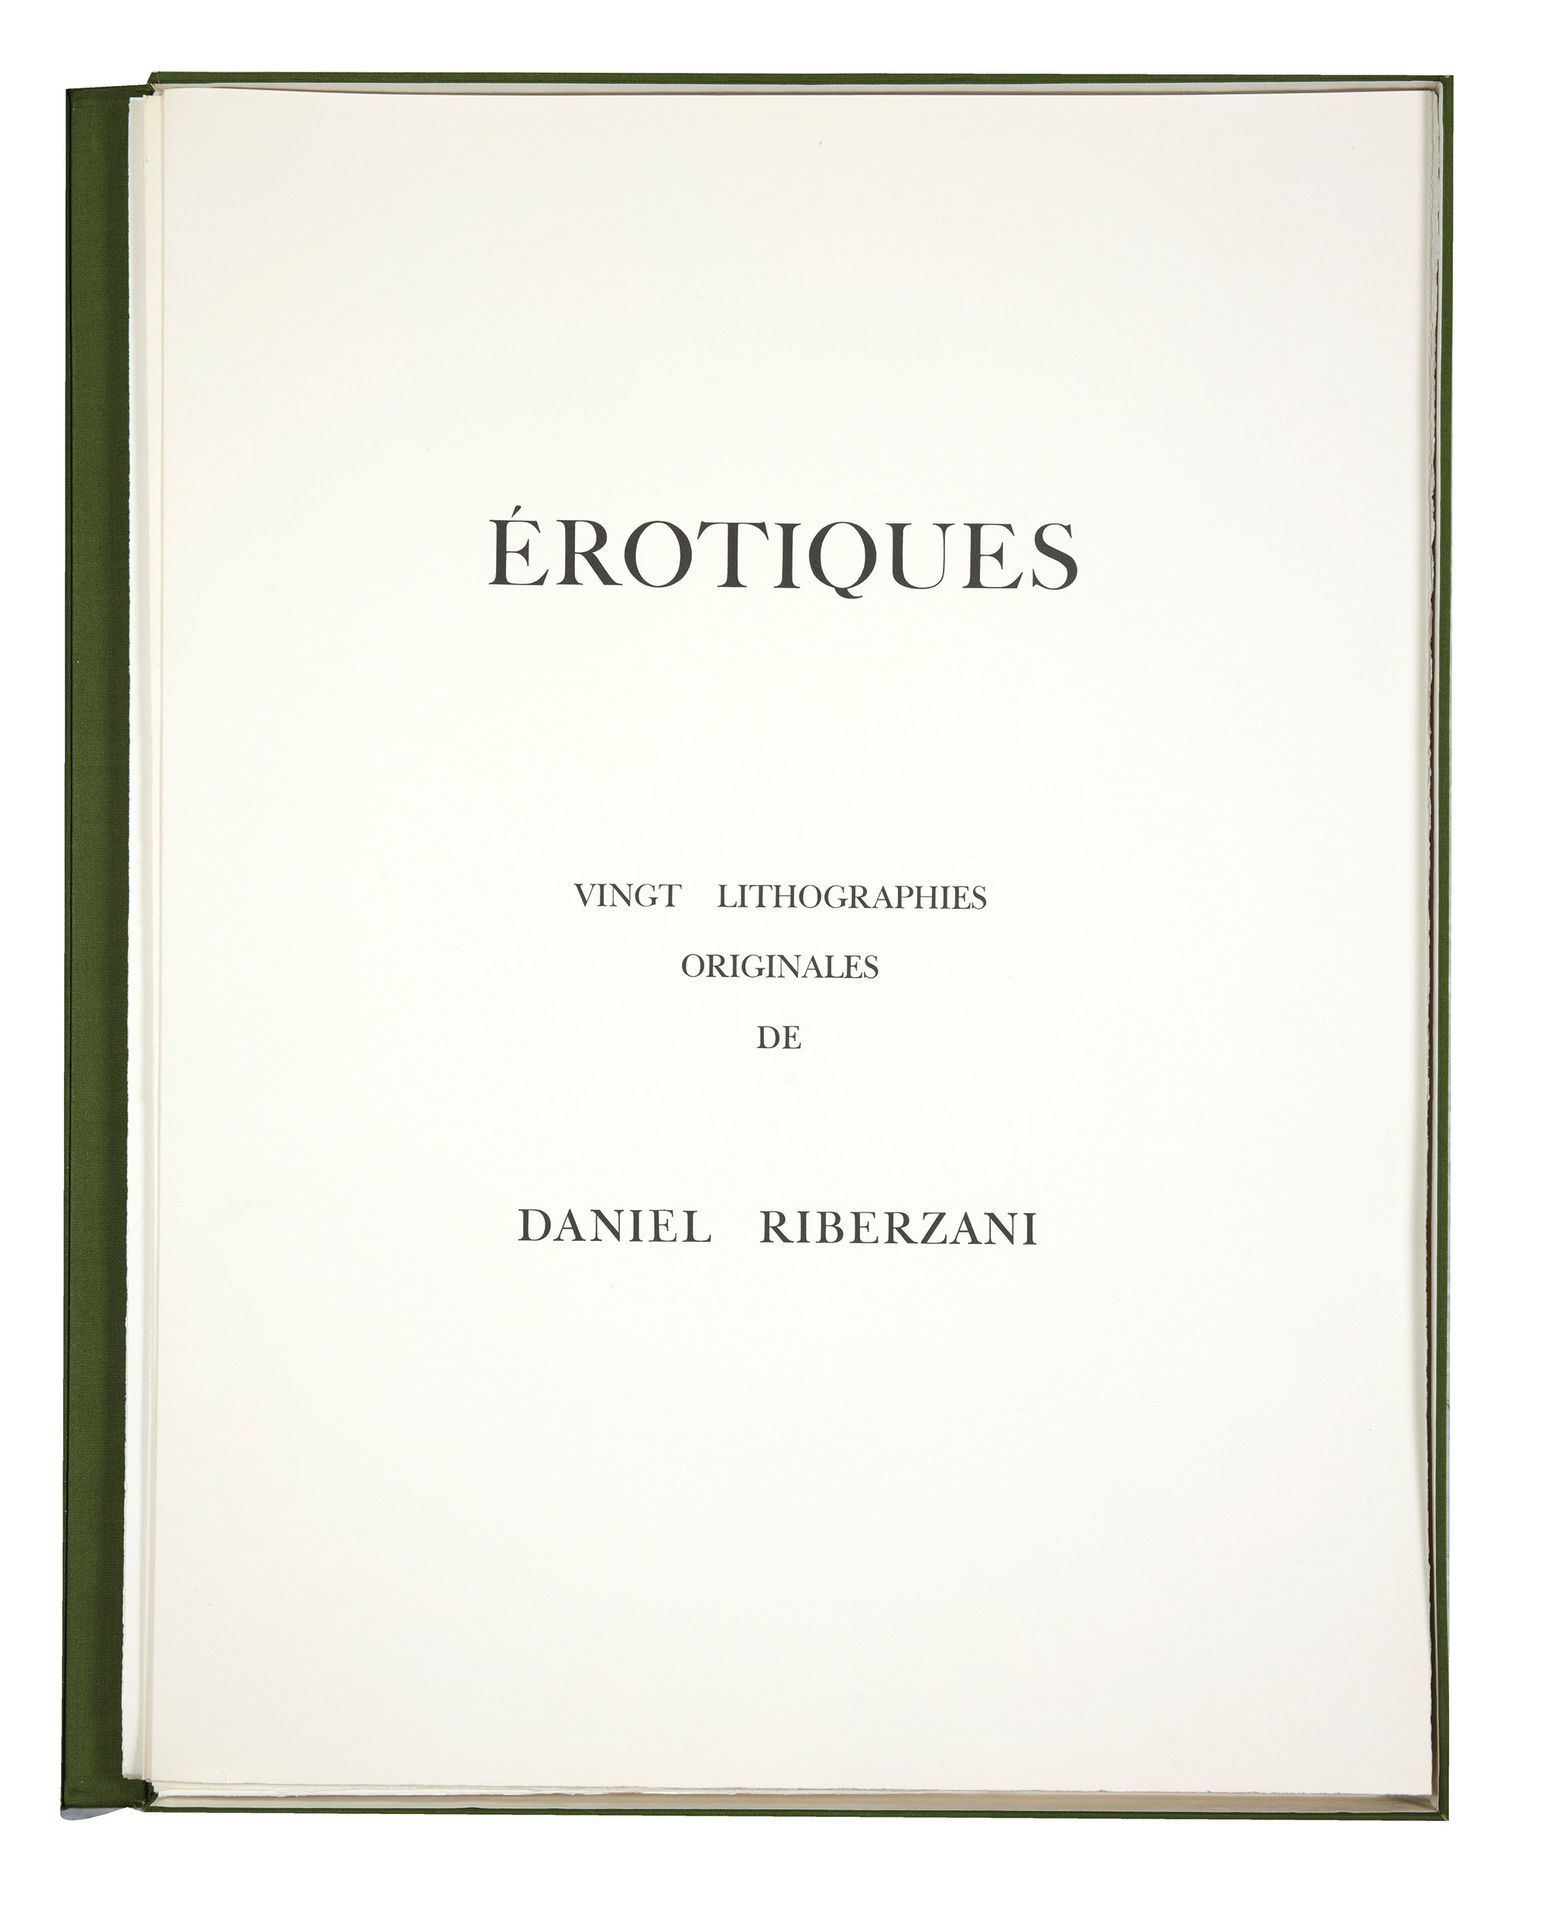 Daniel RIBERZANI Daniel RIBERZANI
Erotiques, veinte litografías originales, 1971&hellip;